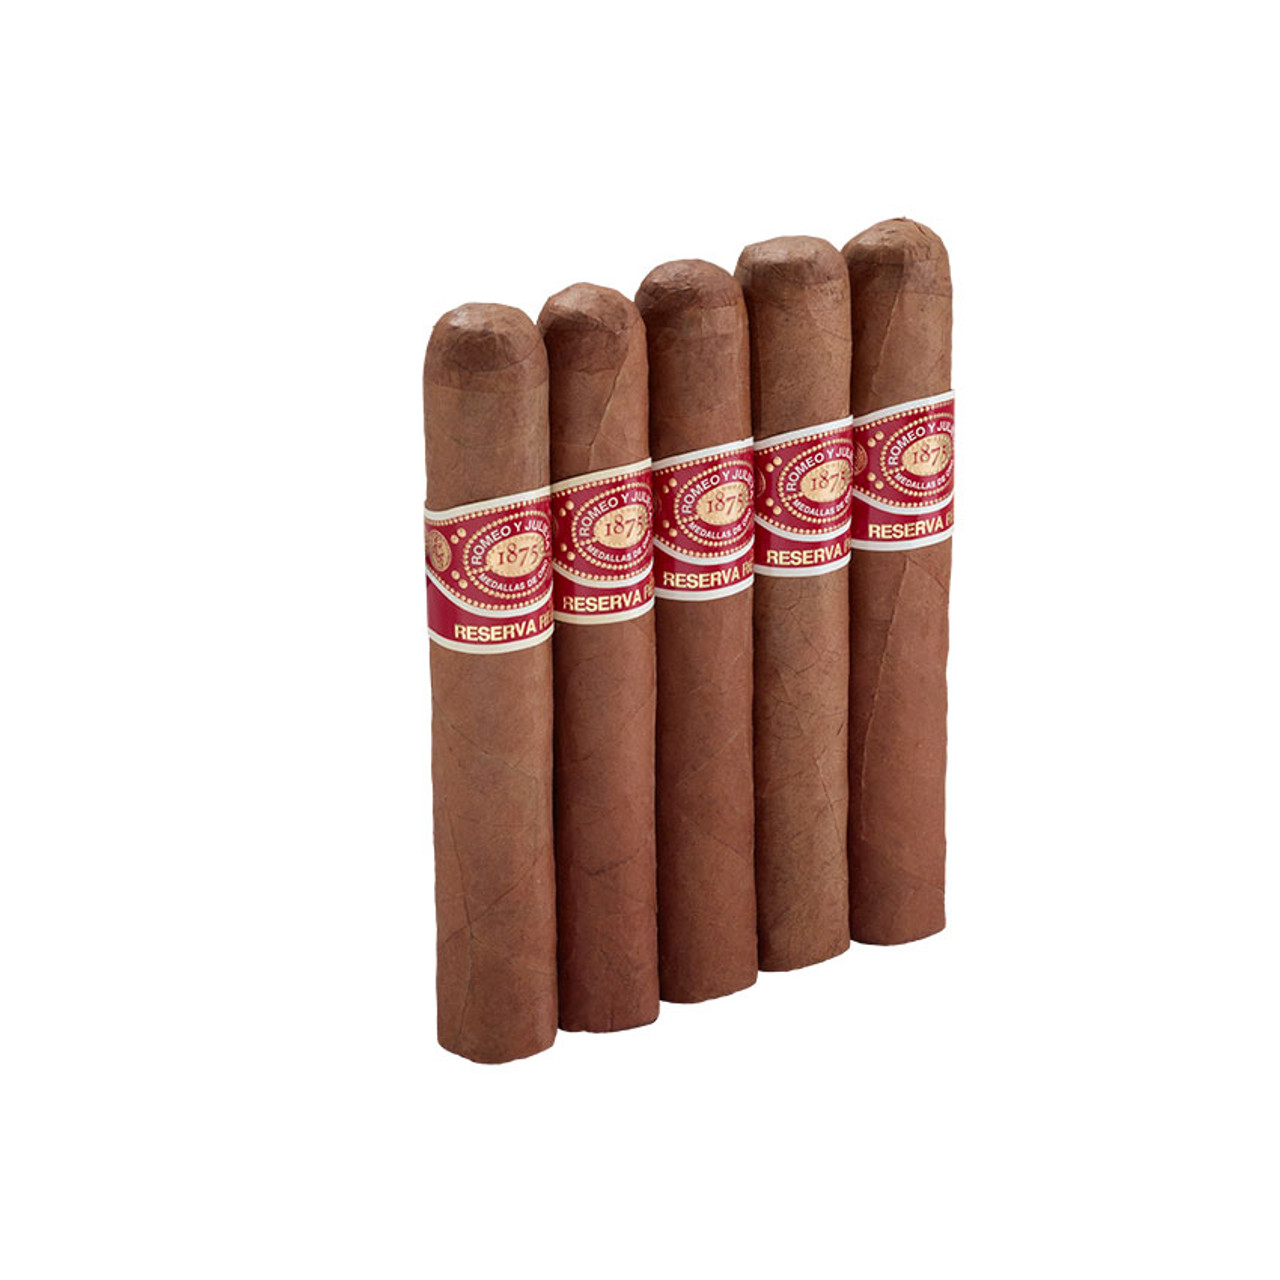 Romeo y Julieta Reserva Real Robusto Cigars - 5 x 52 (Pack of 5) *Box